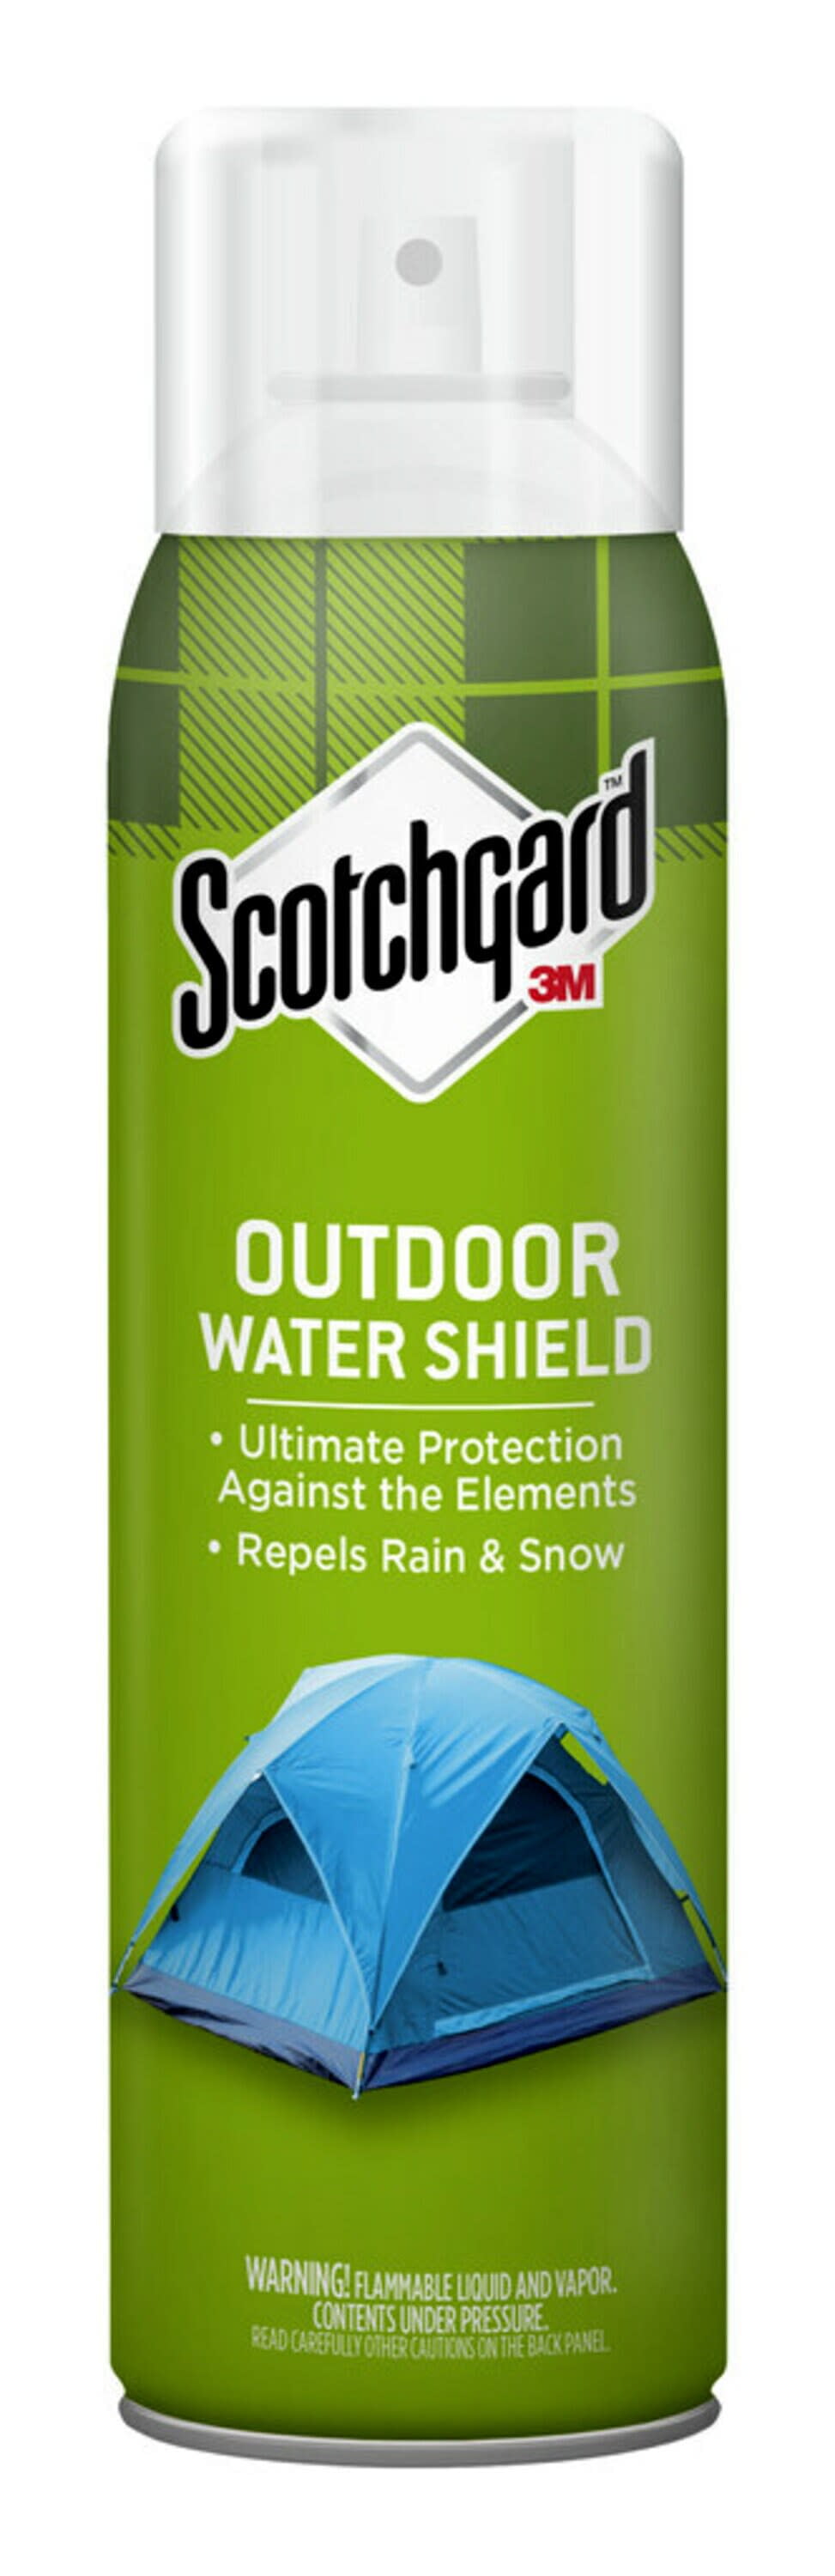  Scotchgard Heavy Duty Water Shield, Repels Water